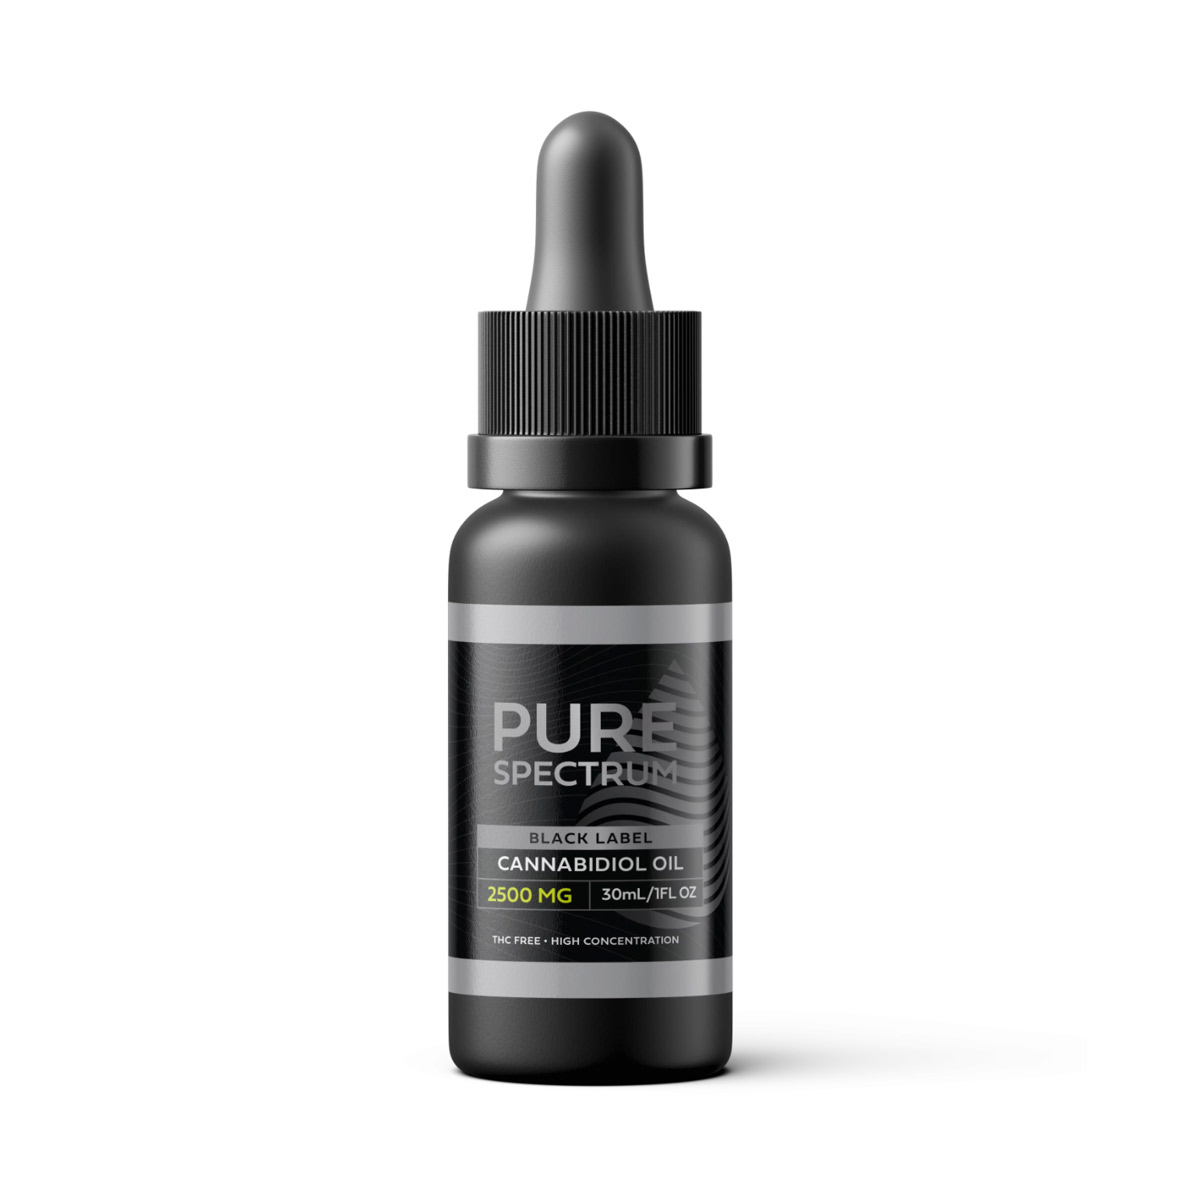 Pure Spectrum, Black Label Cannabidiol Oil, Broad Spectrum THC-Free, 1oz, 2500mg of CBD